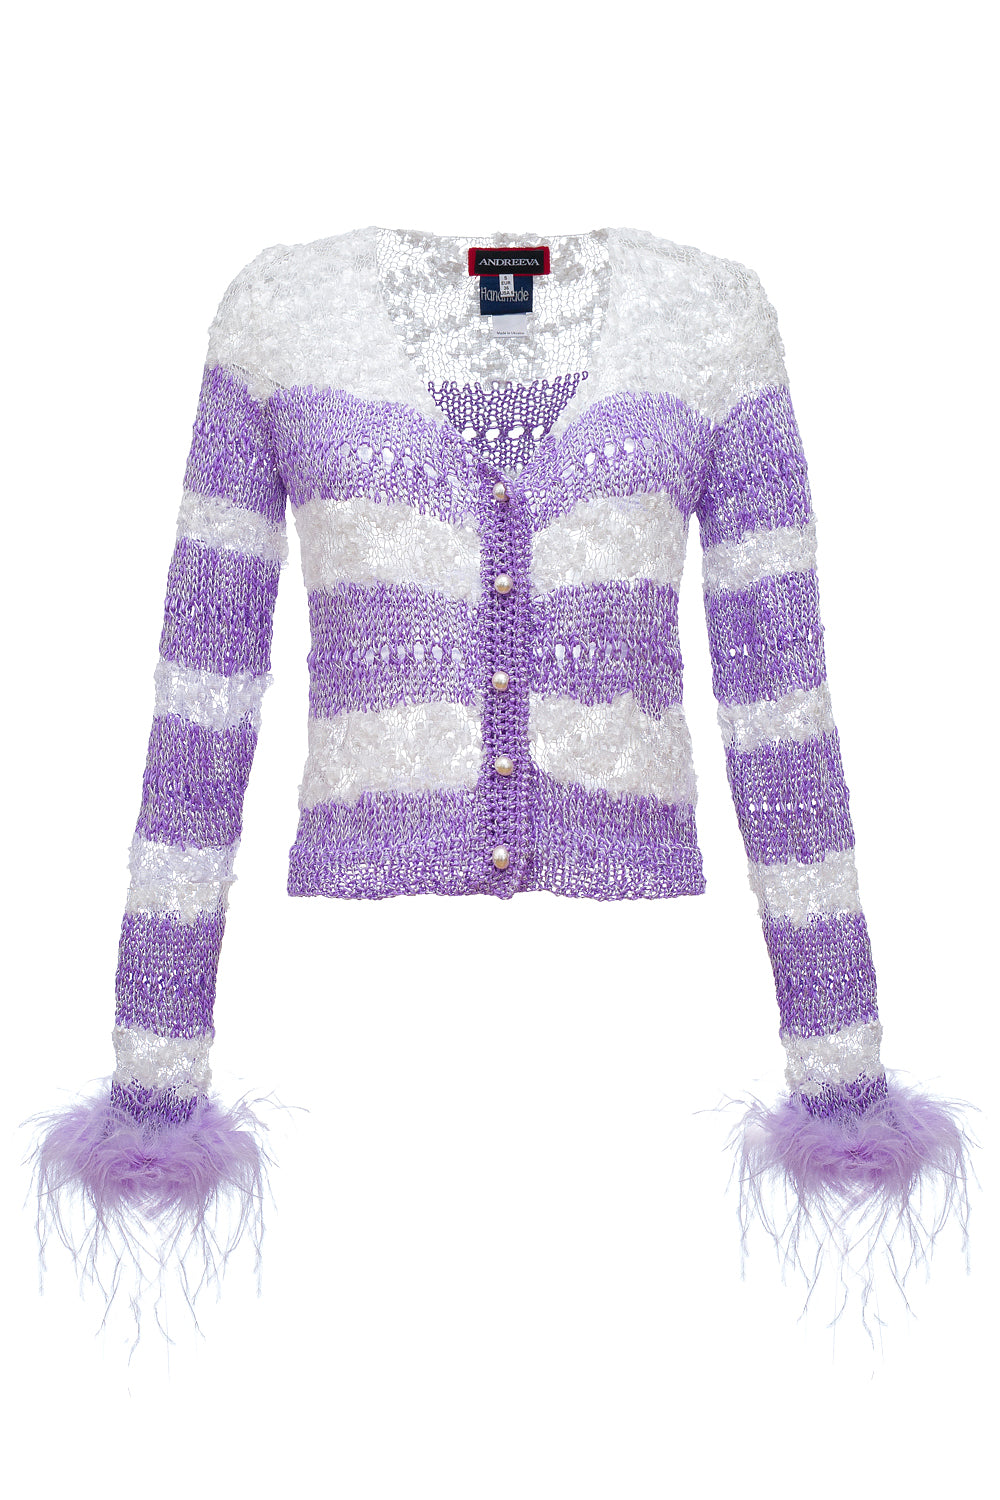 andreeva lavender handmade knit sweater